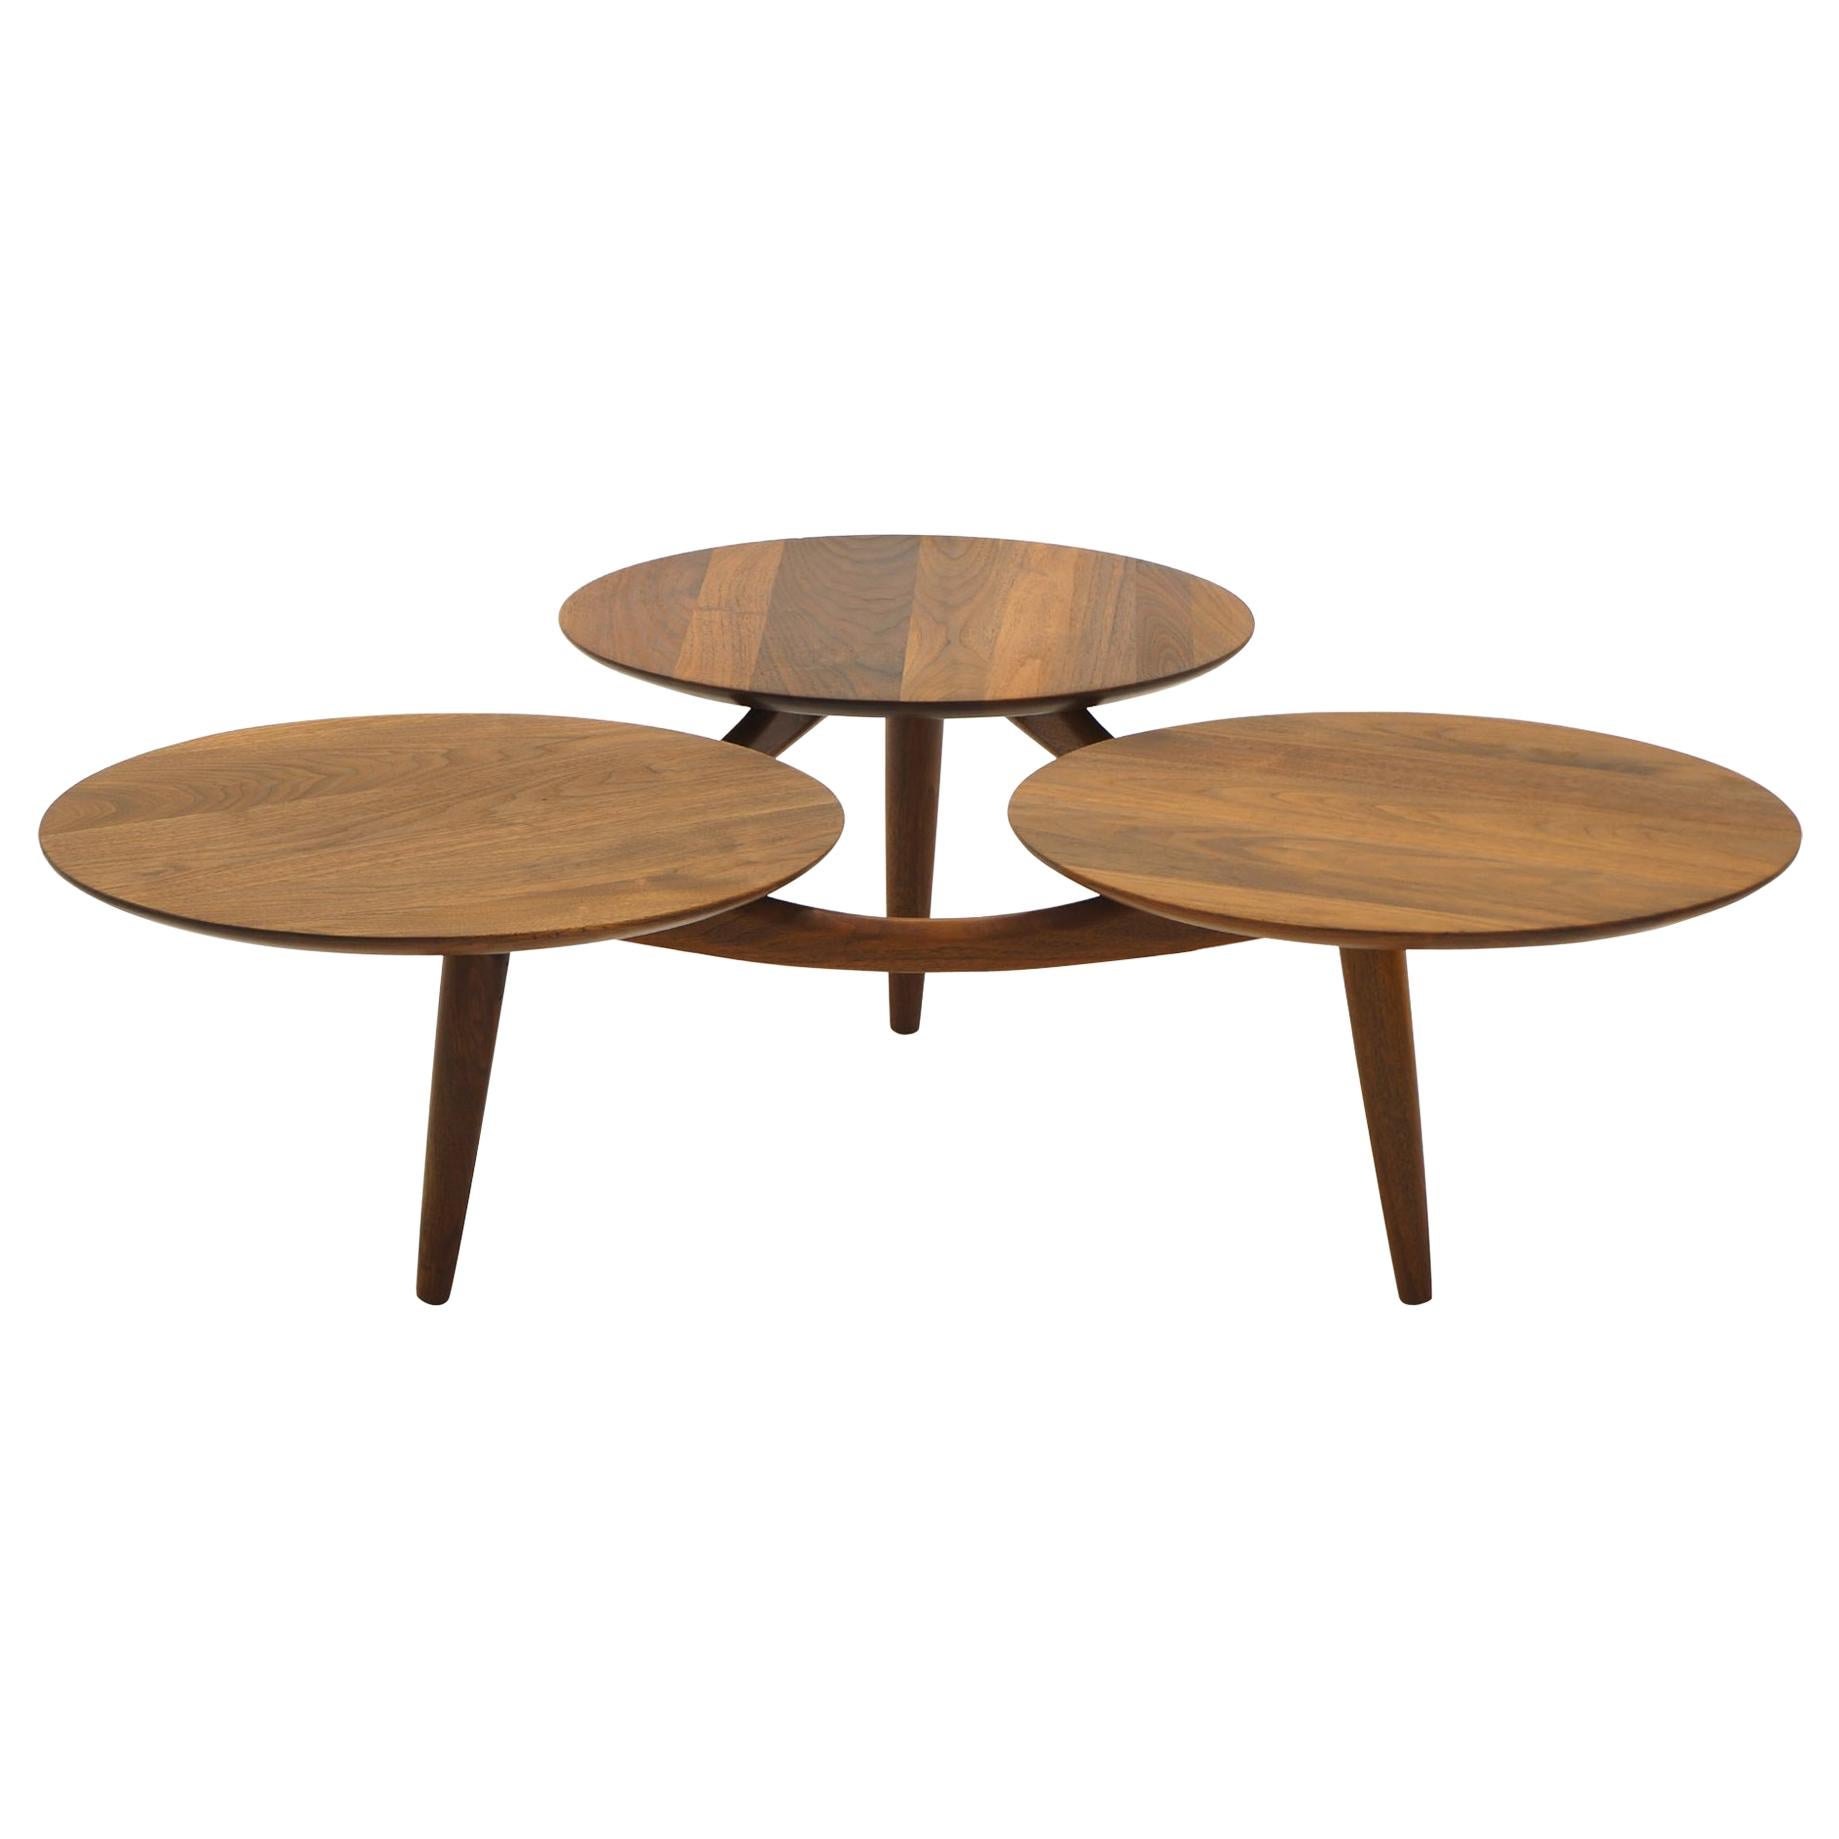 Danish Modern Teak Coffee Table, Three Round Surfaces, Style of Greta Grossman